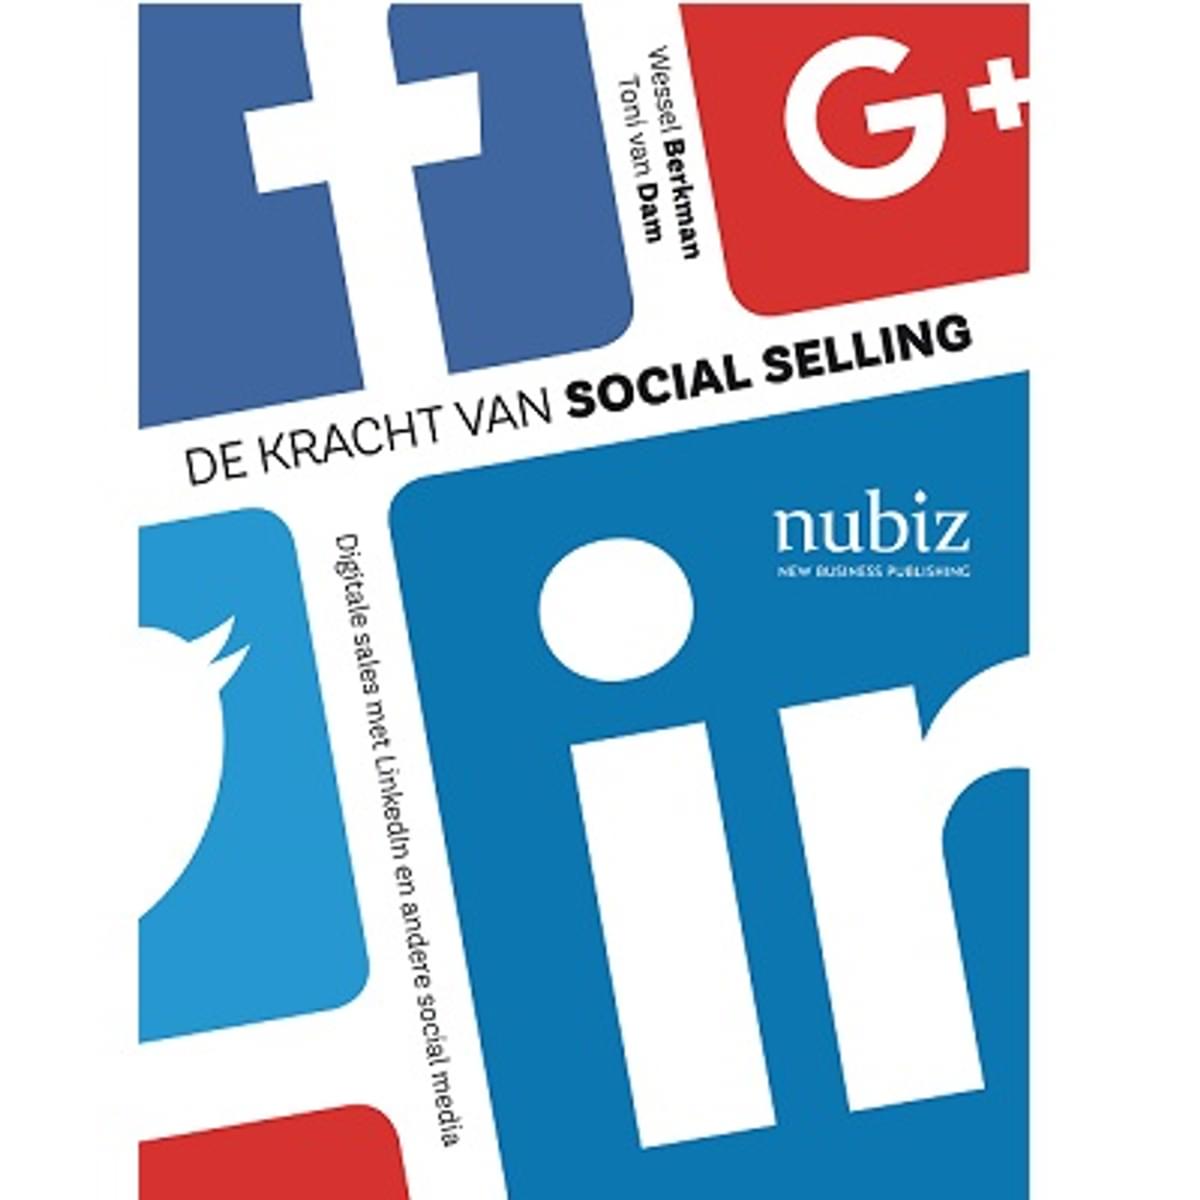 Boek: De kracht van social selling image